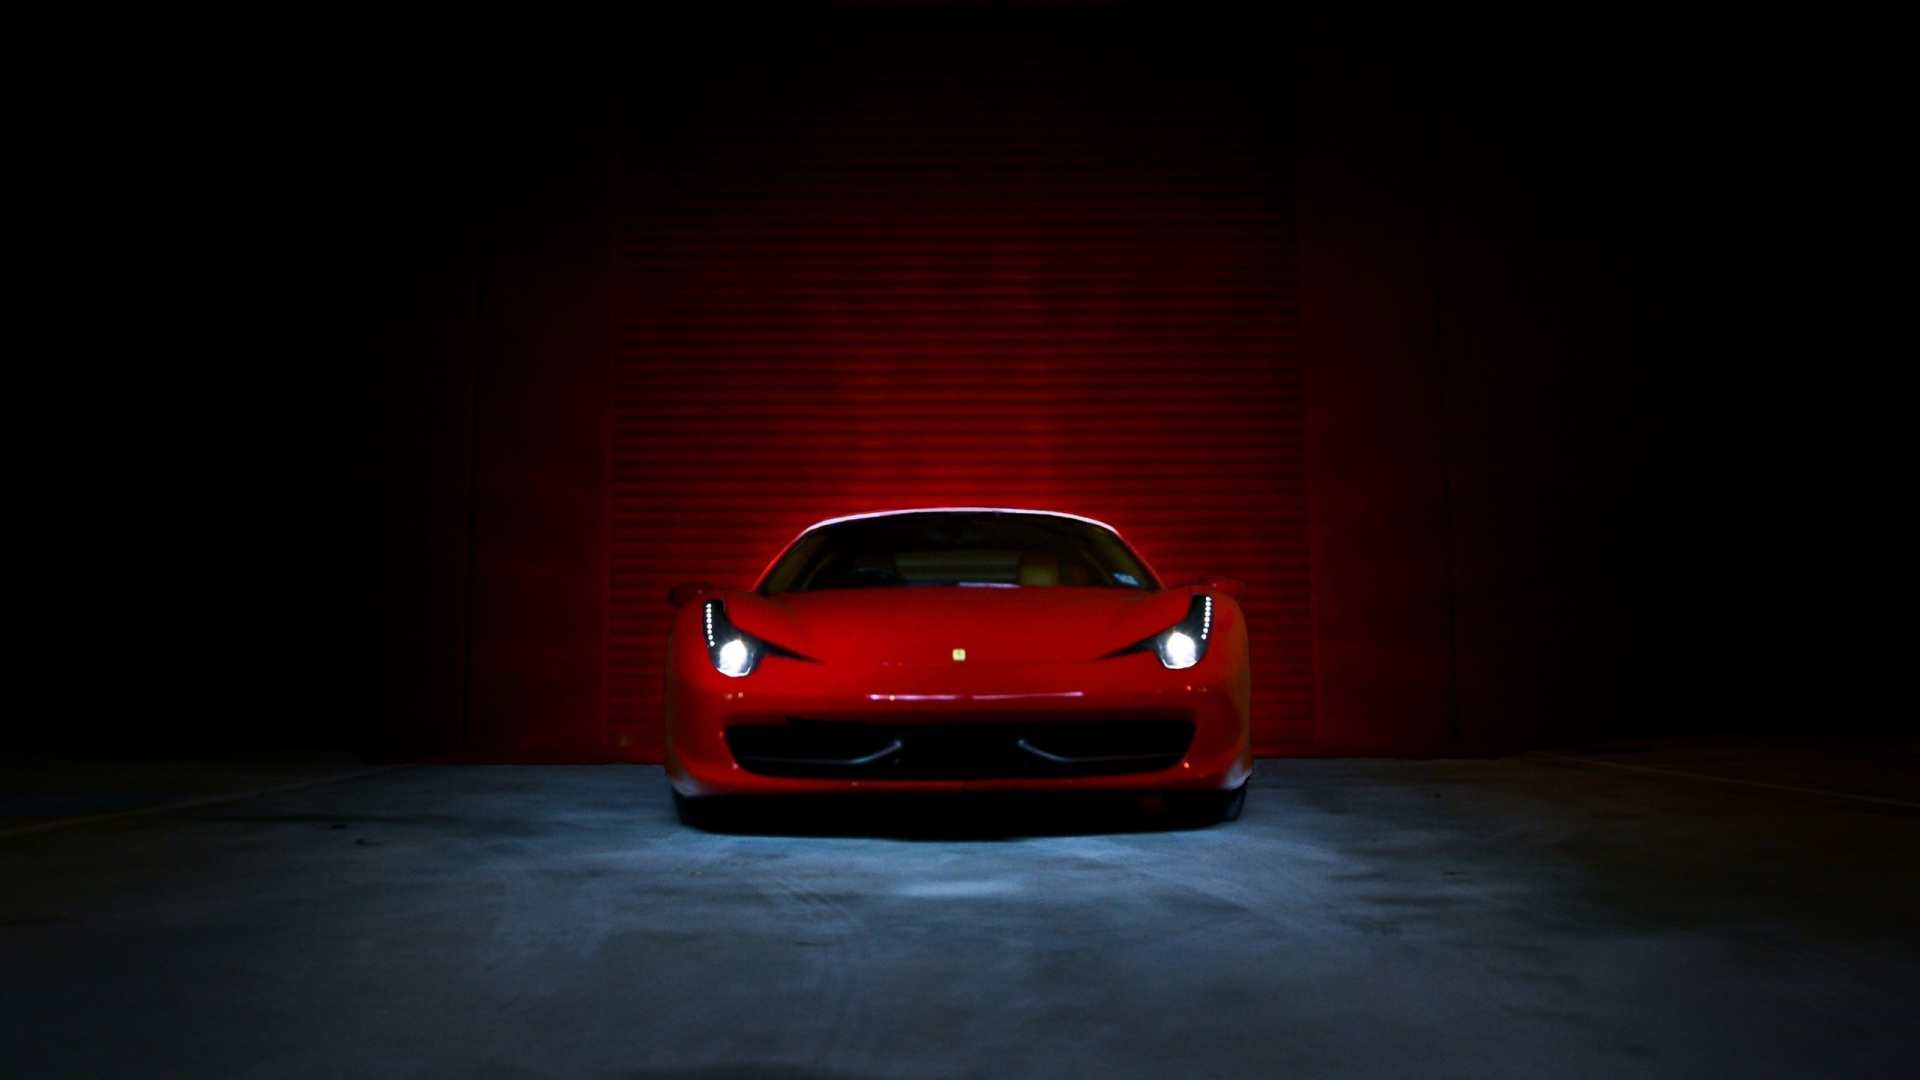 Ferrari 458 Italia Red  for 1920 x 1080 HDTV 1080p resolution